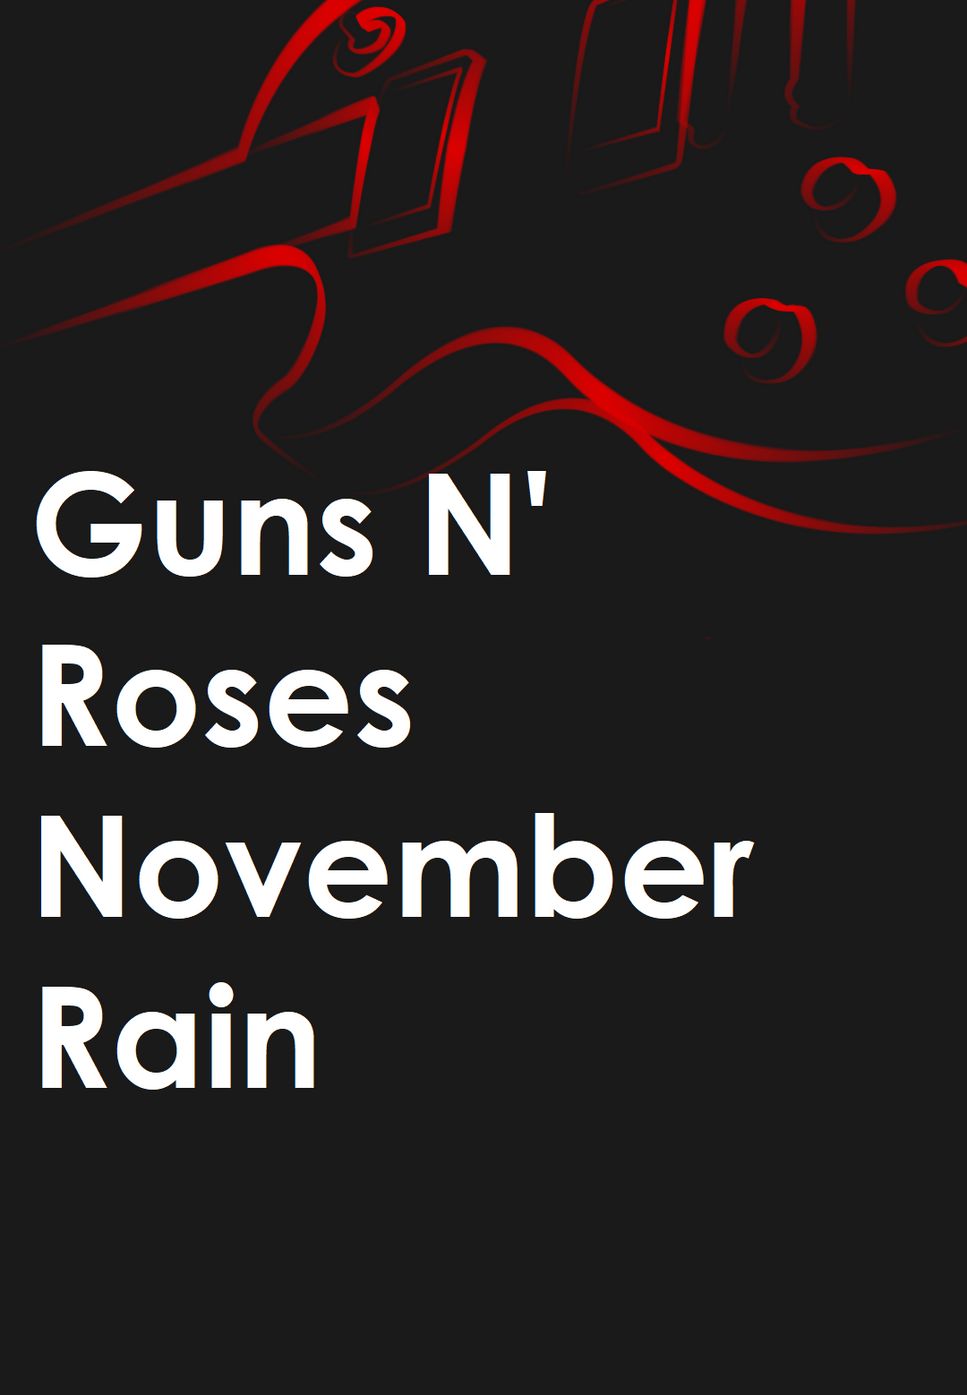 Guns N' Roses - November Rain by Mario Serrato